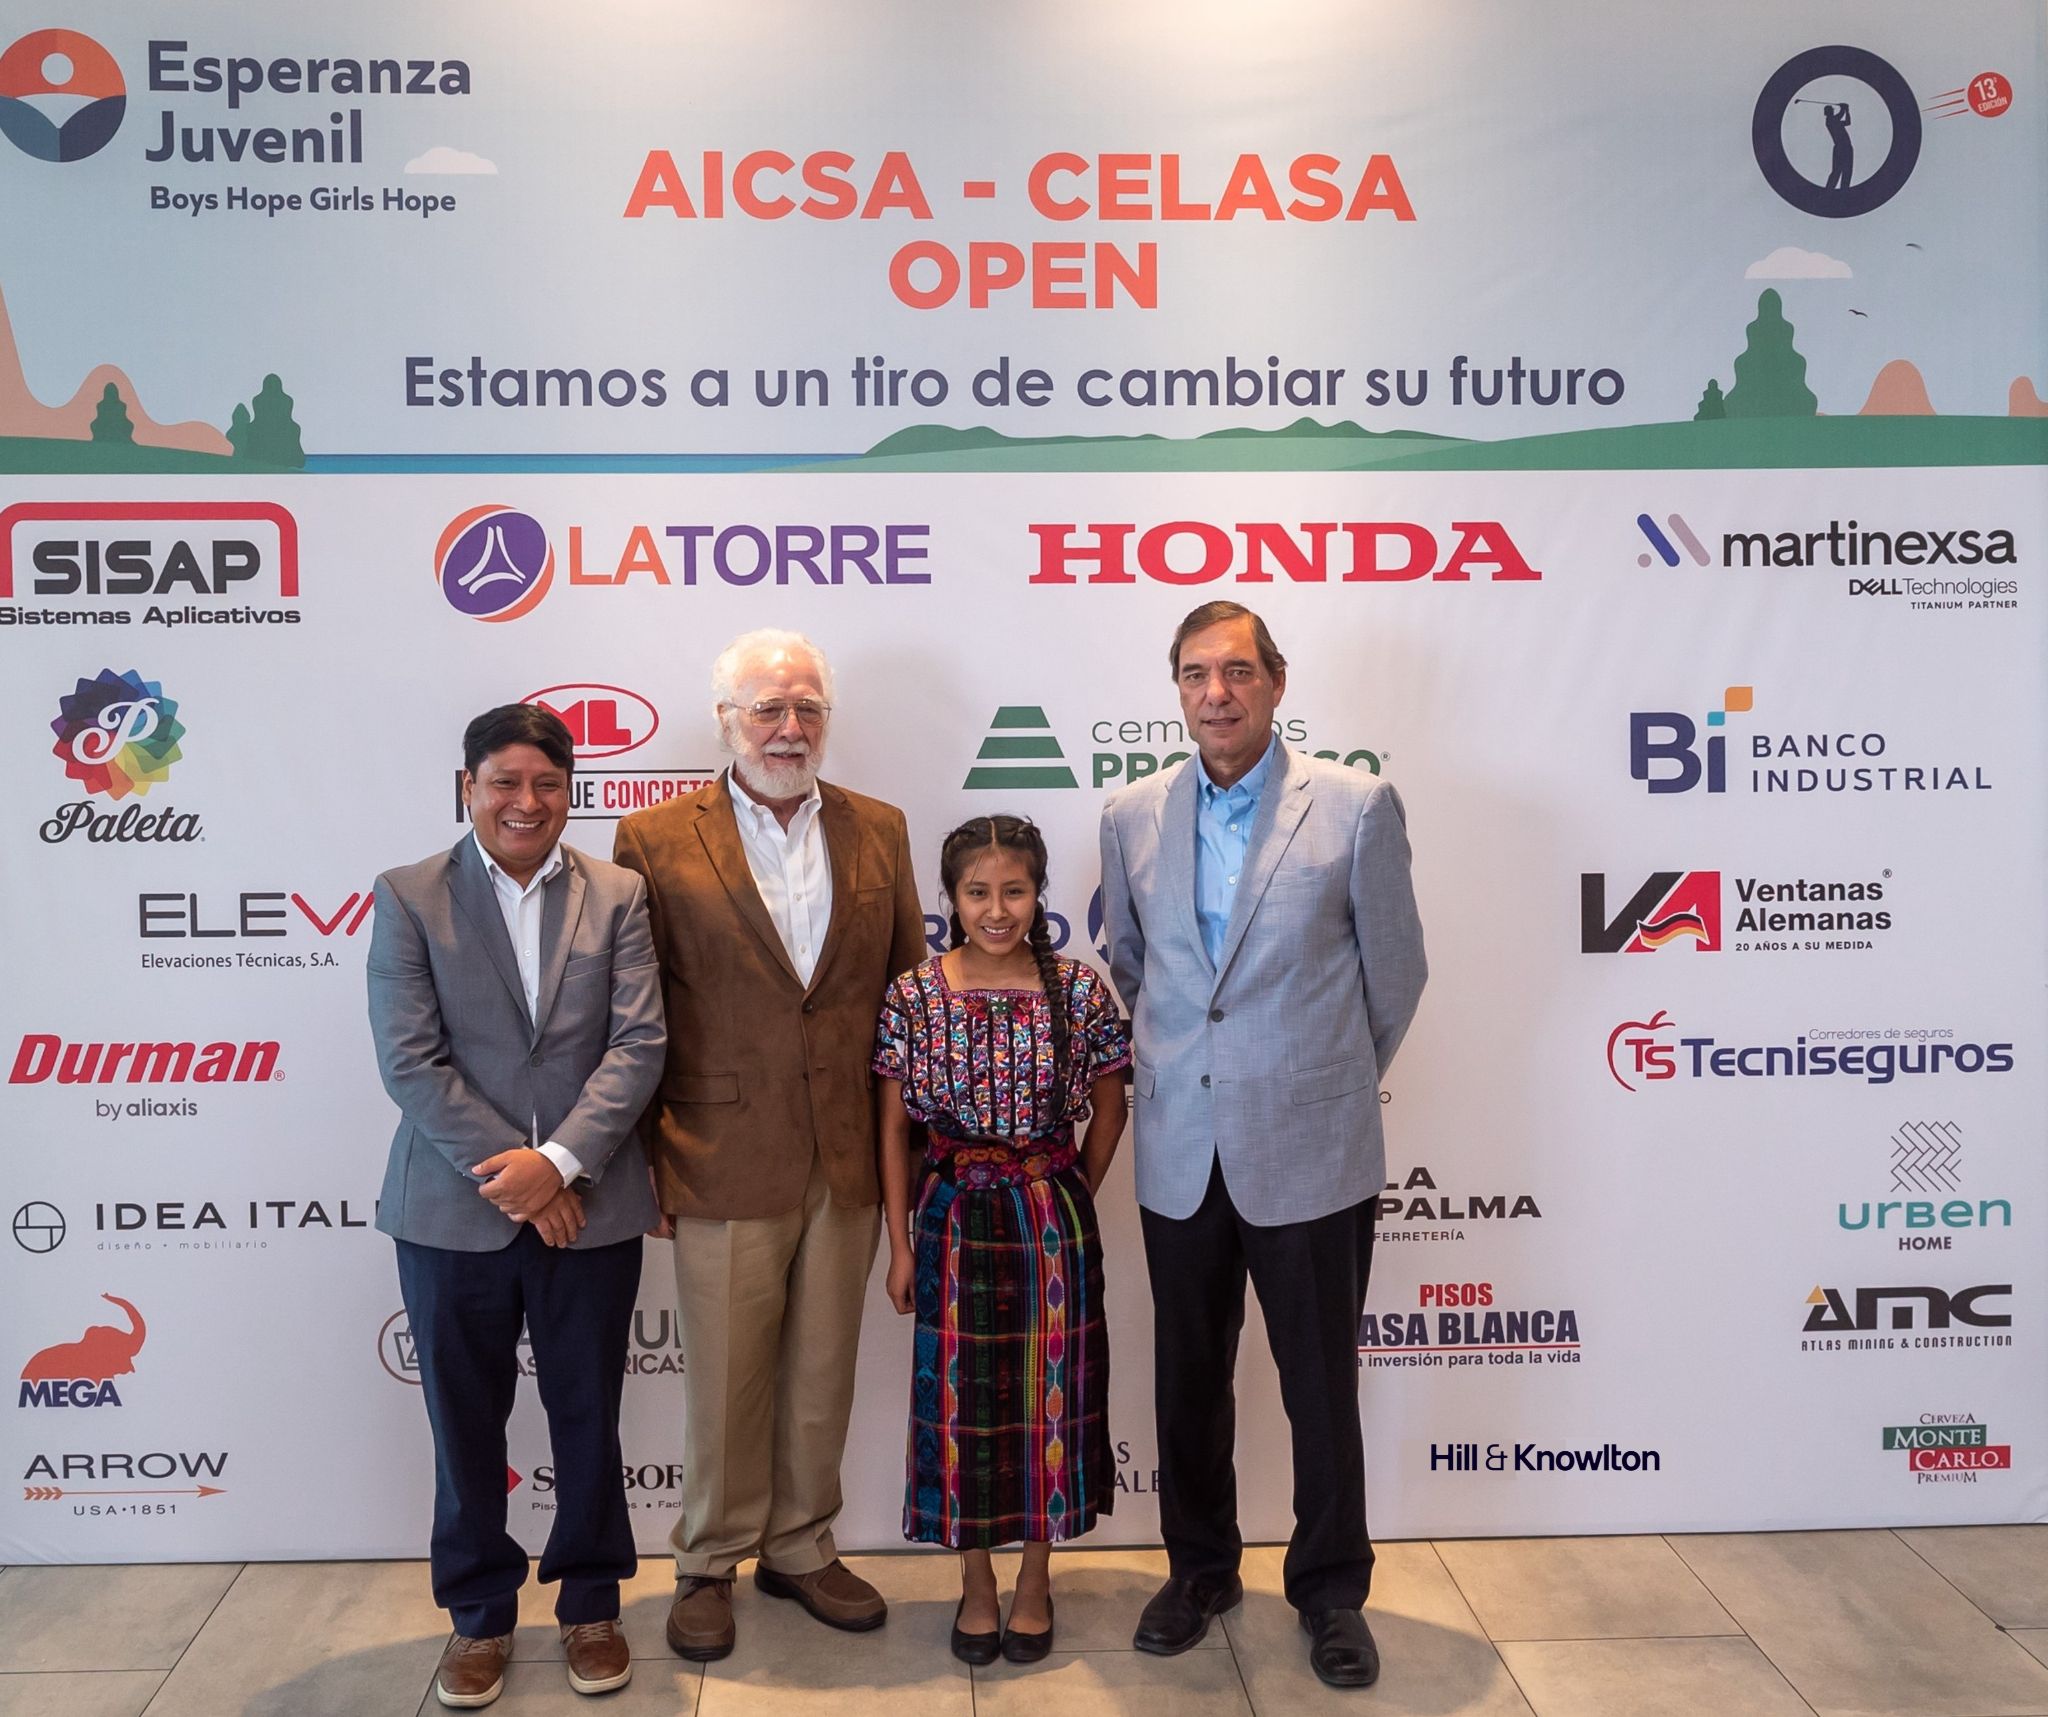 Aicsa-Celasa Open, lanza el XIII Torneo de Golf a beneficio de Esperanza Juvenil